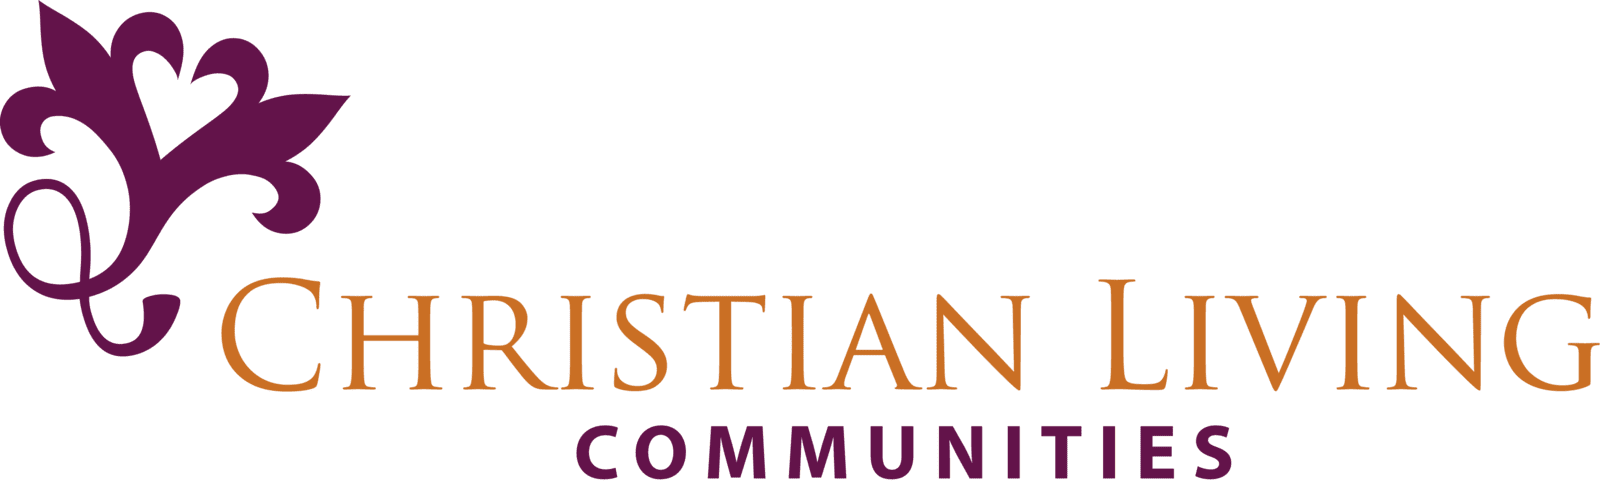 christian living communities logo